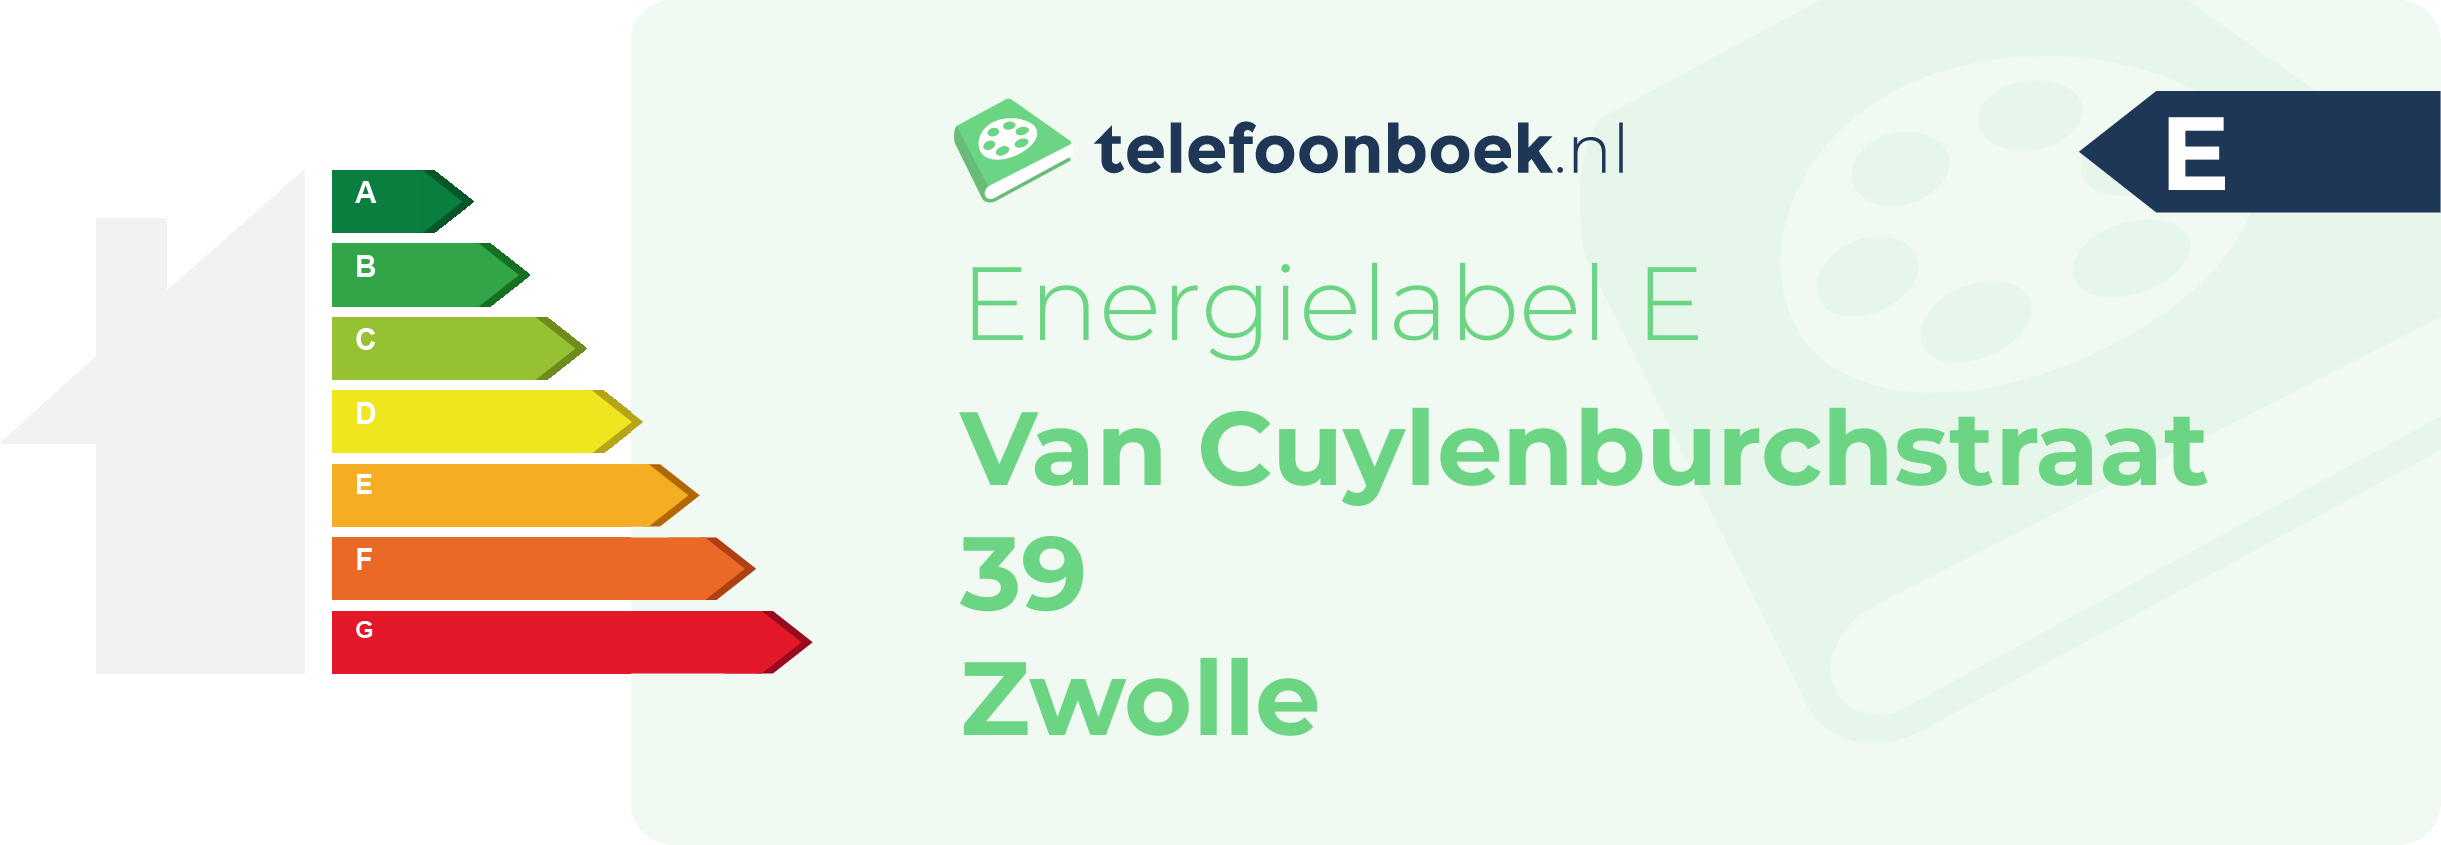 Energielabel Van Cuylenburchstraat 39 Zwolle